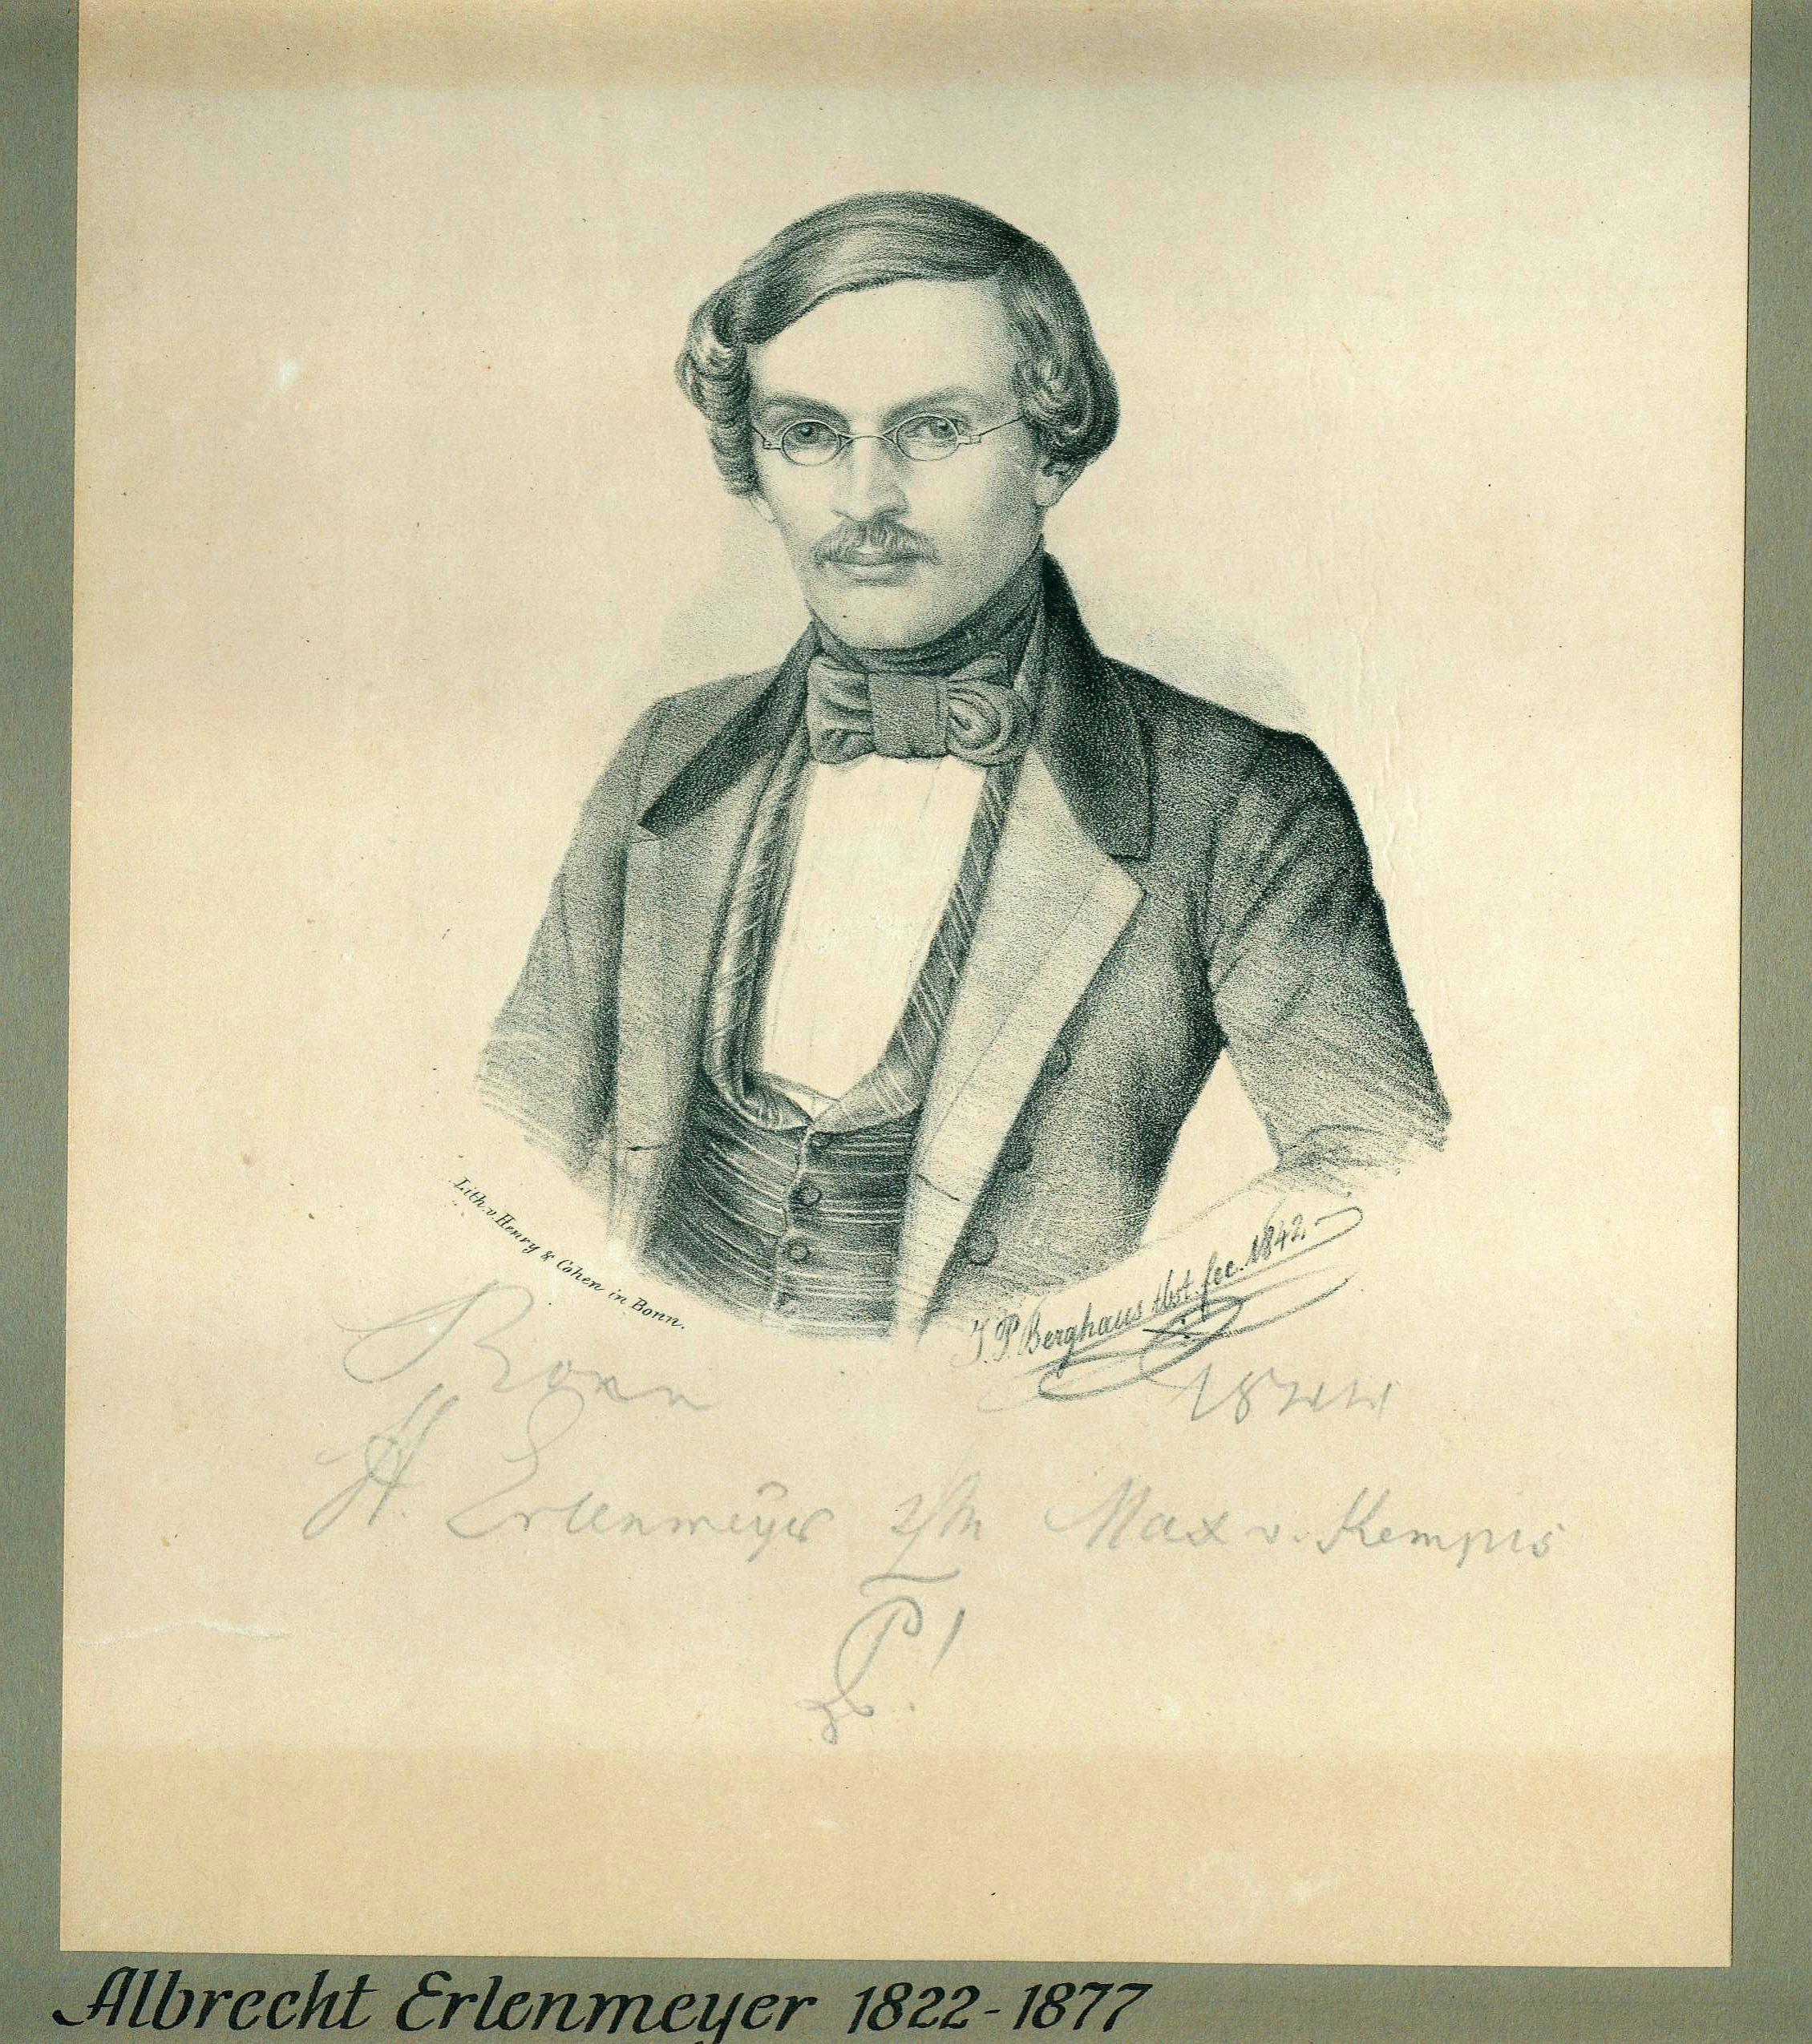 Adolph Albrecht Erlenmeyer I - Gründer der Landsmannschaft Teutonia Bonn von 1844